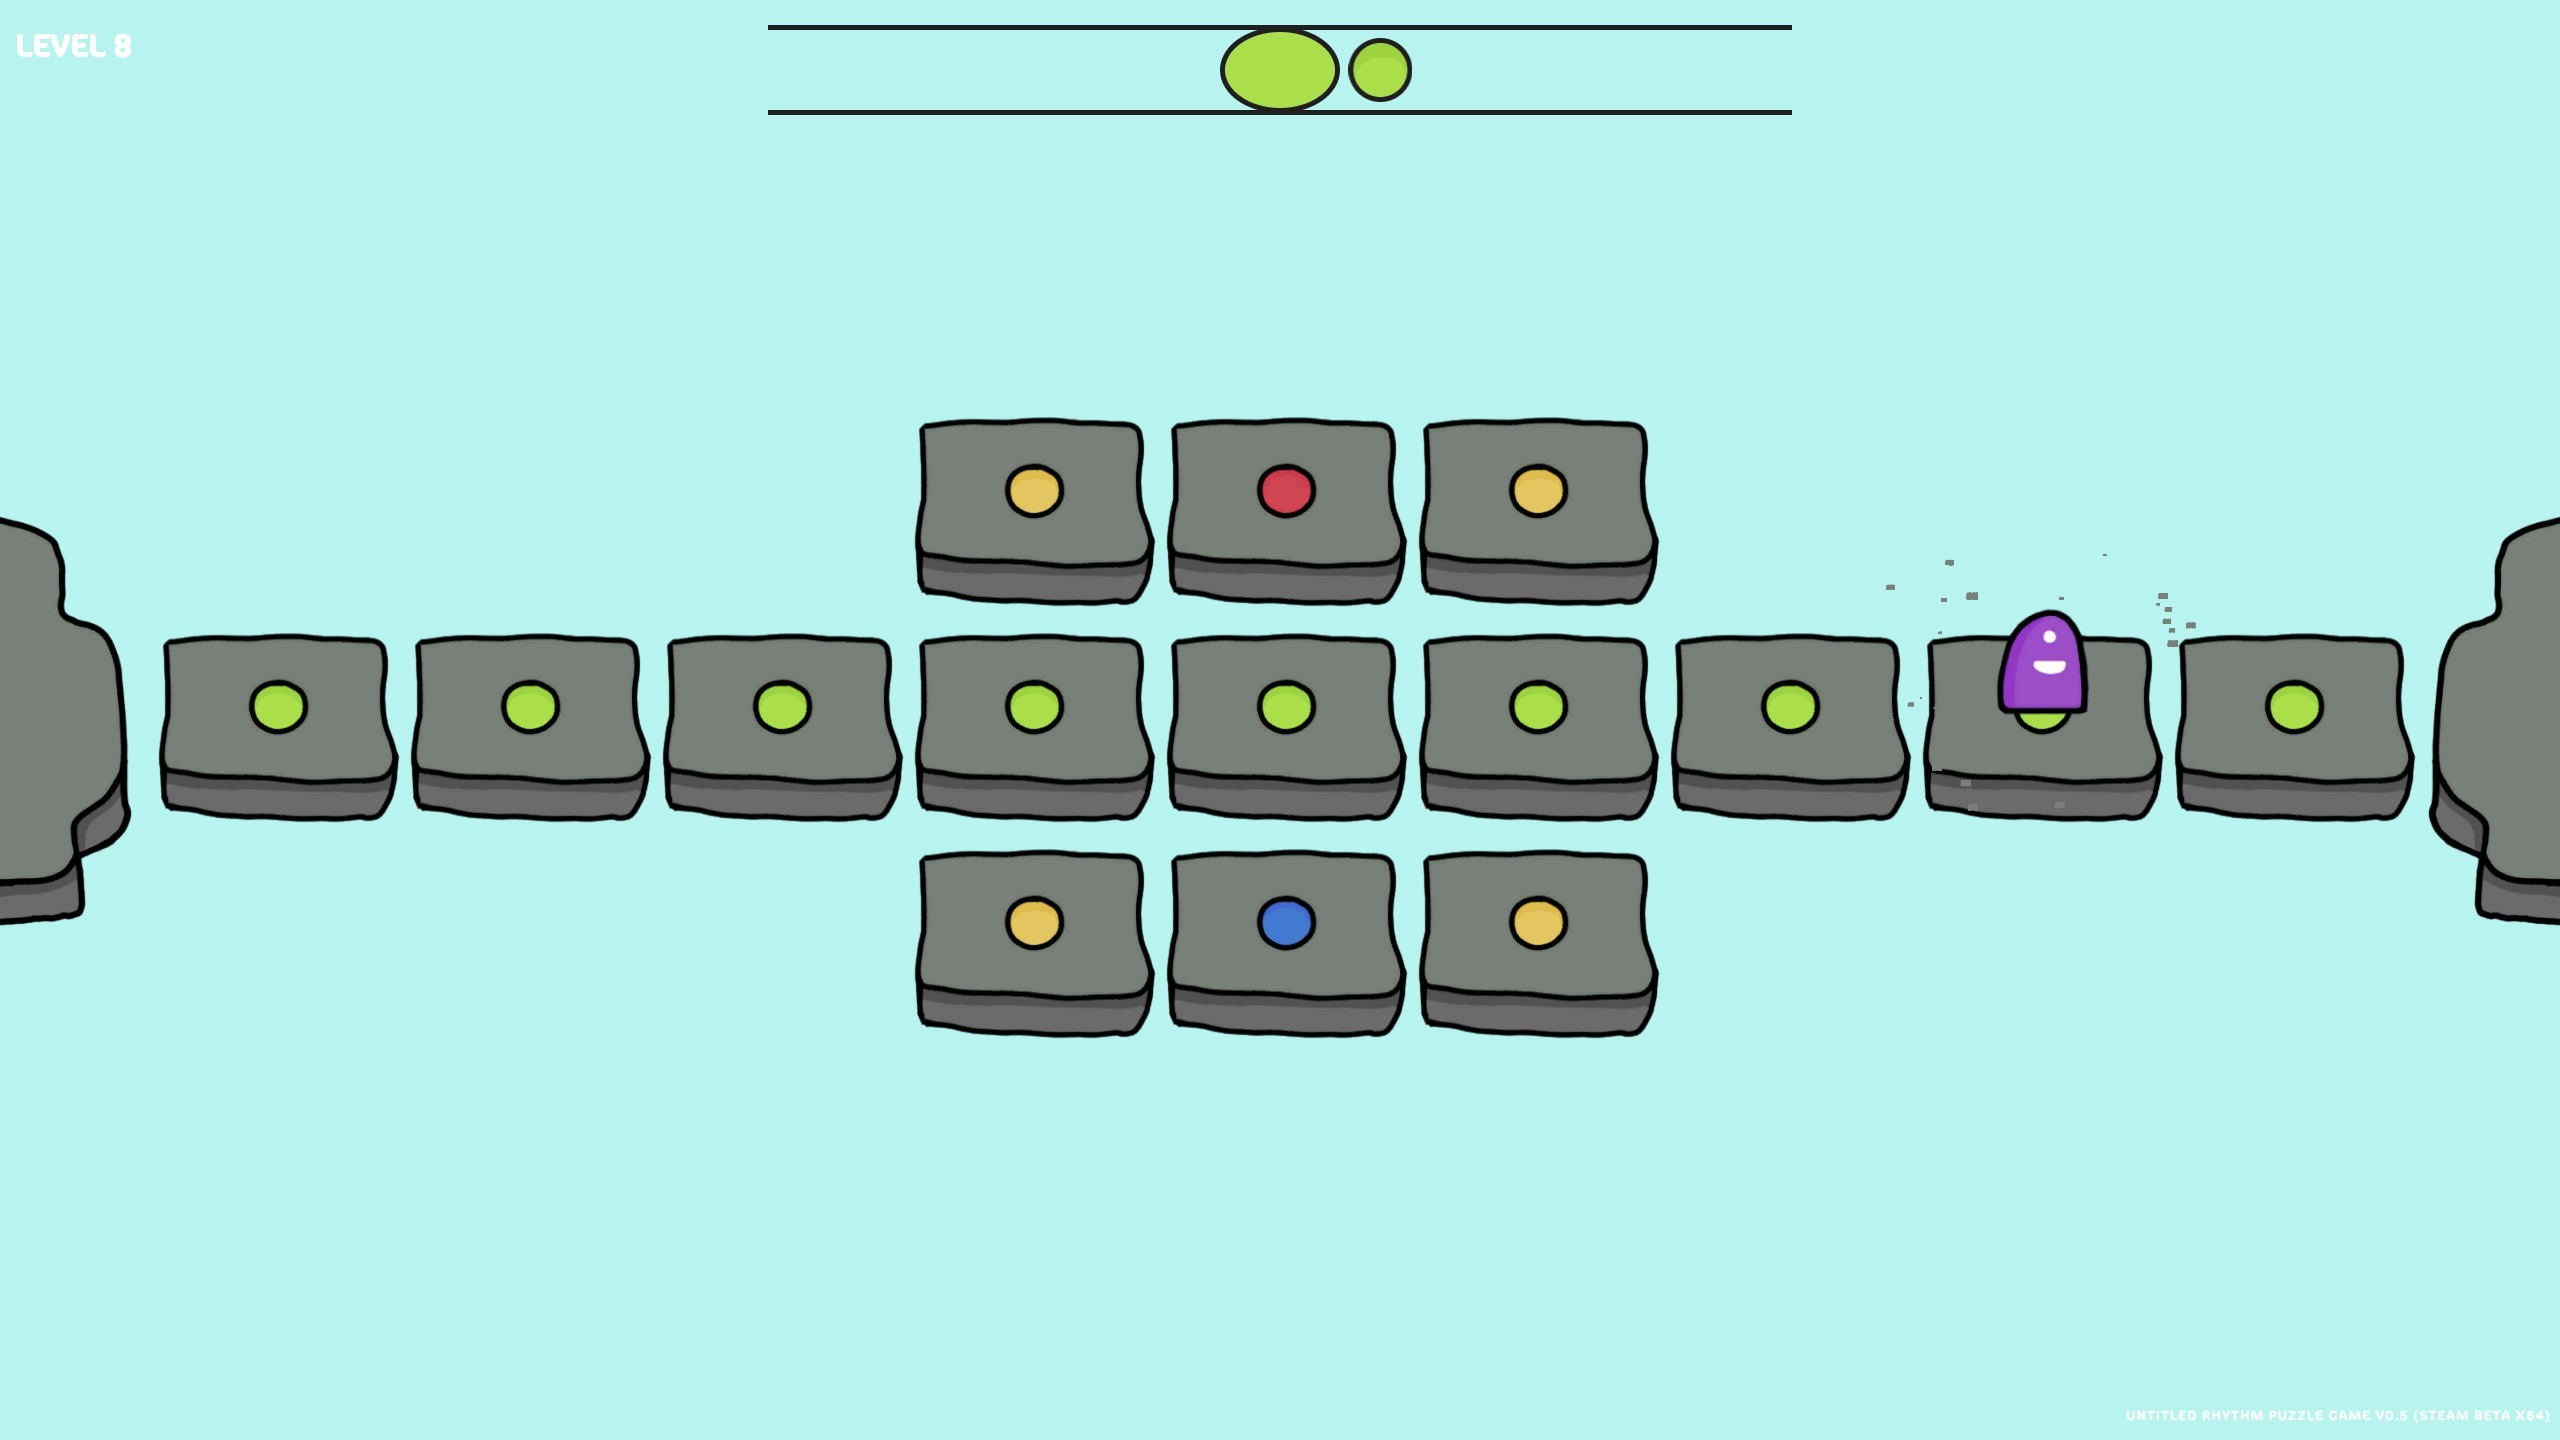 Untitled Rhythm Puzzle Game screenshot